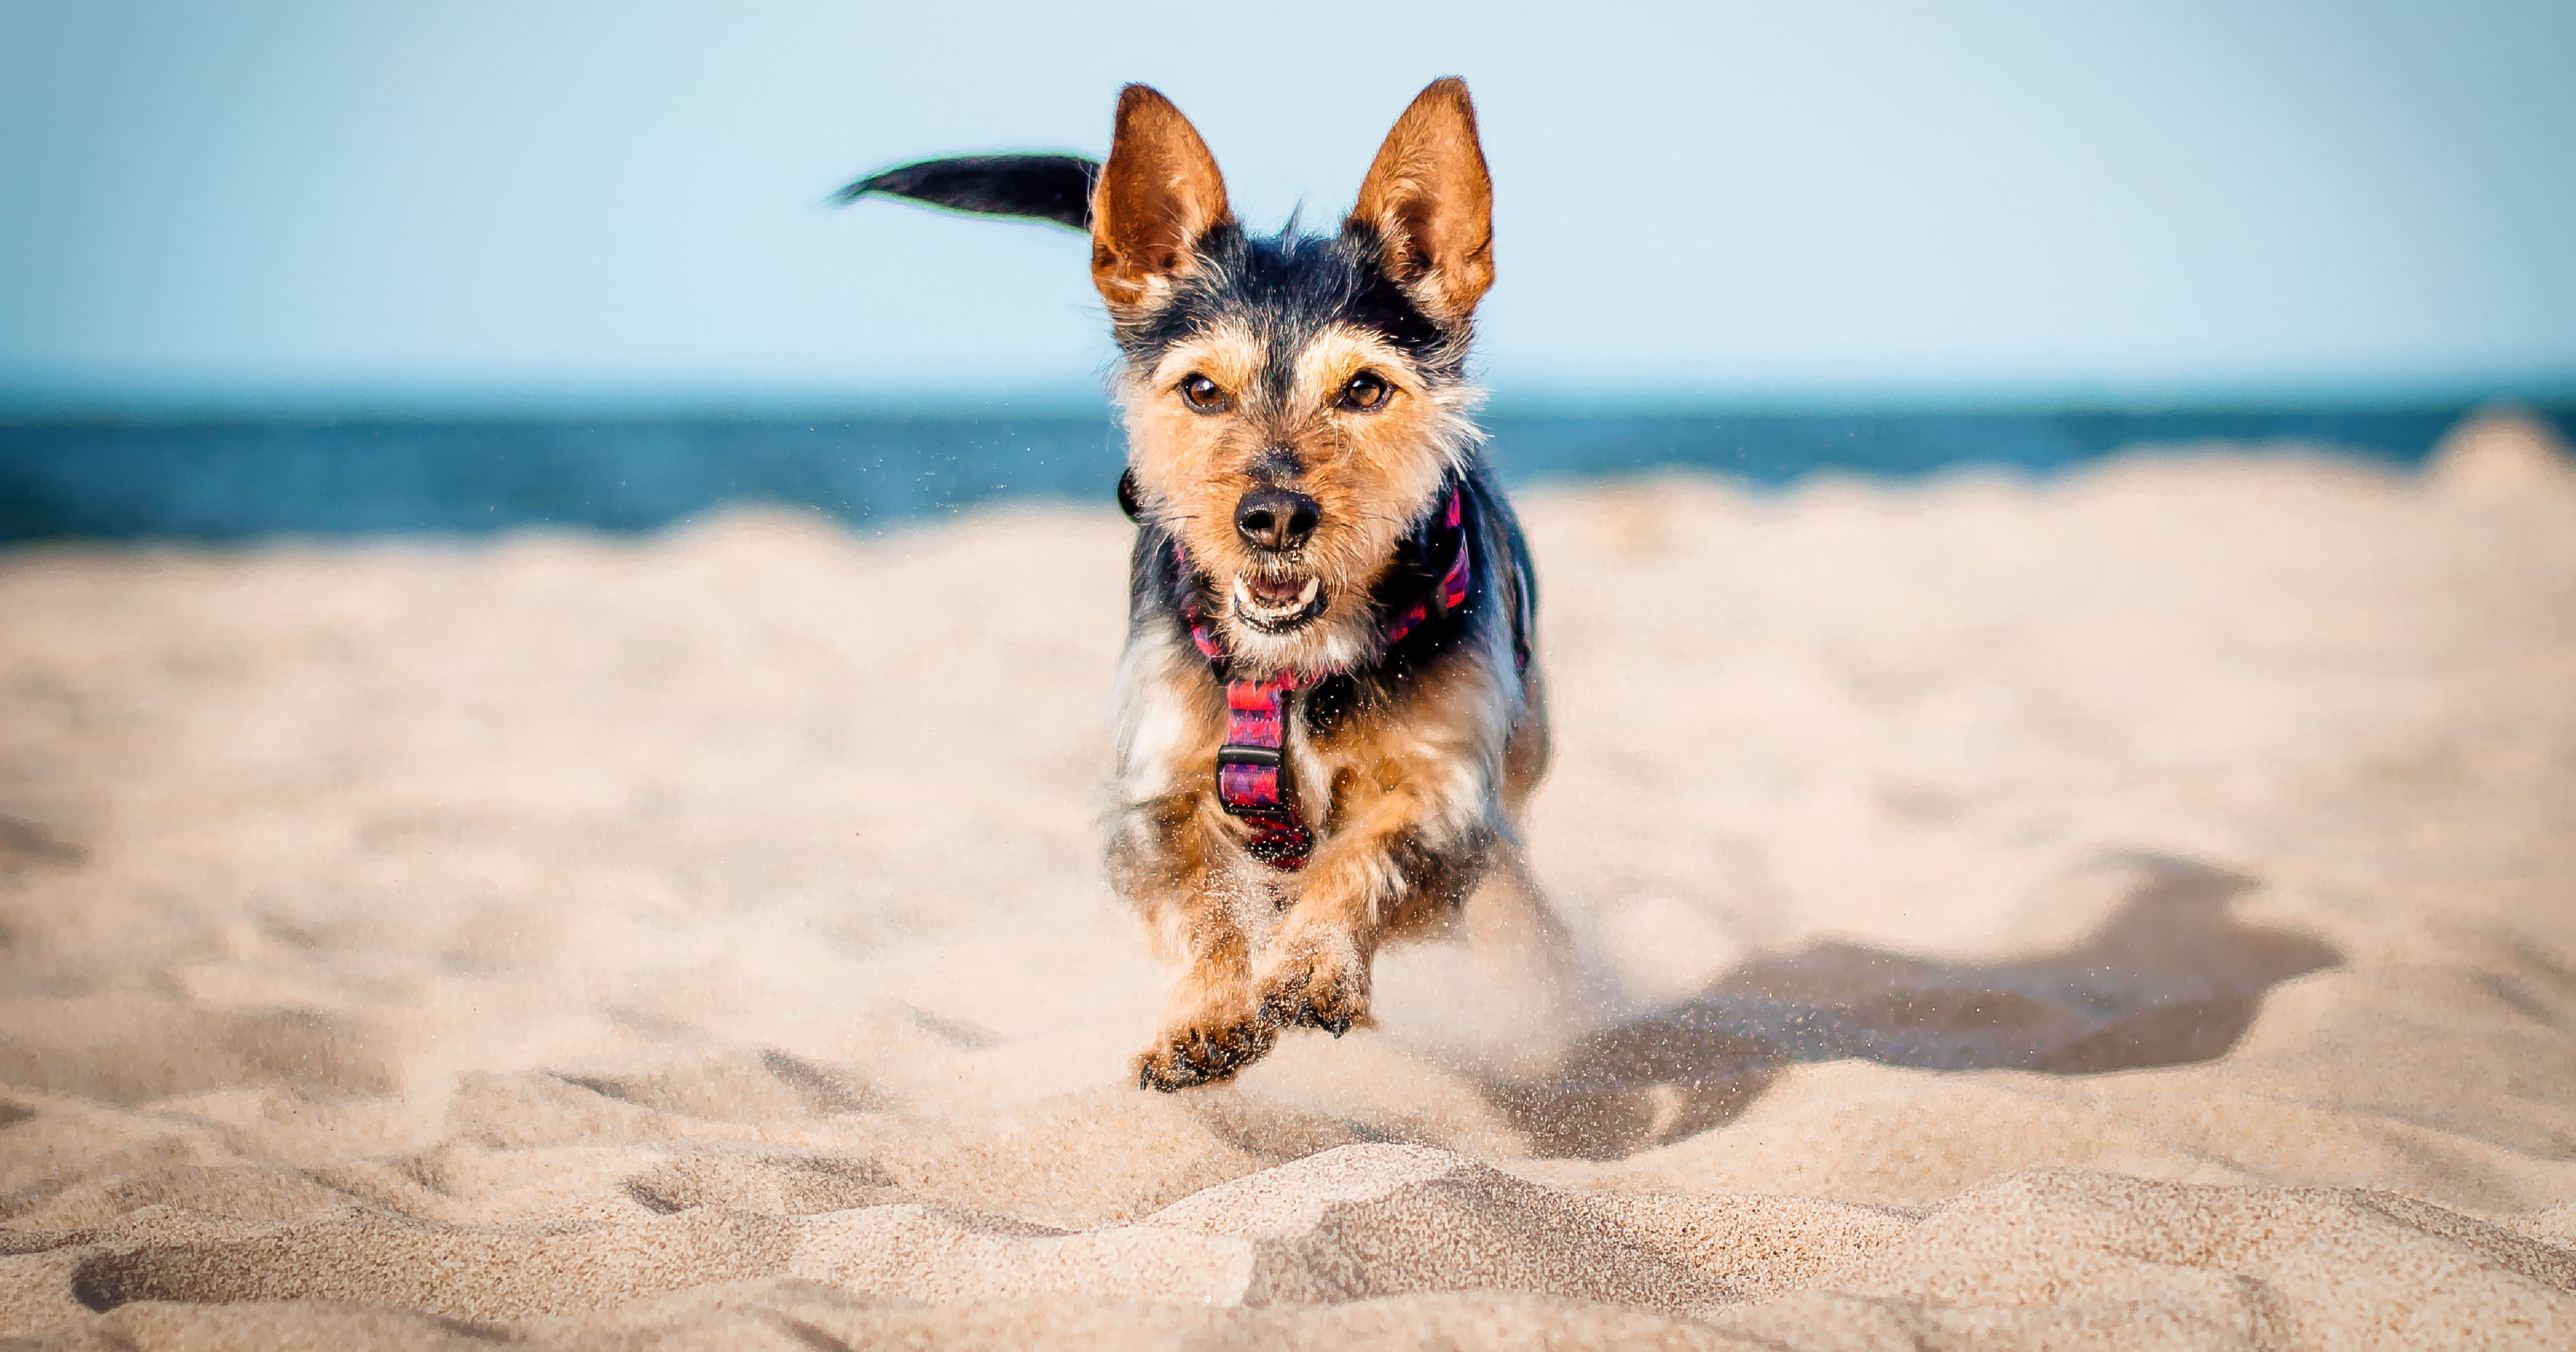 A dog running through the sand on the beach.